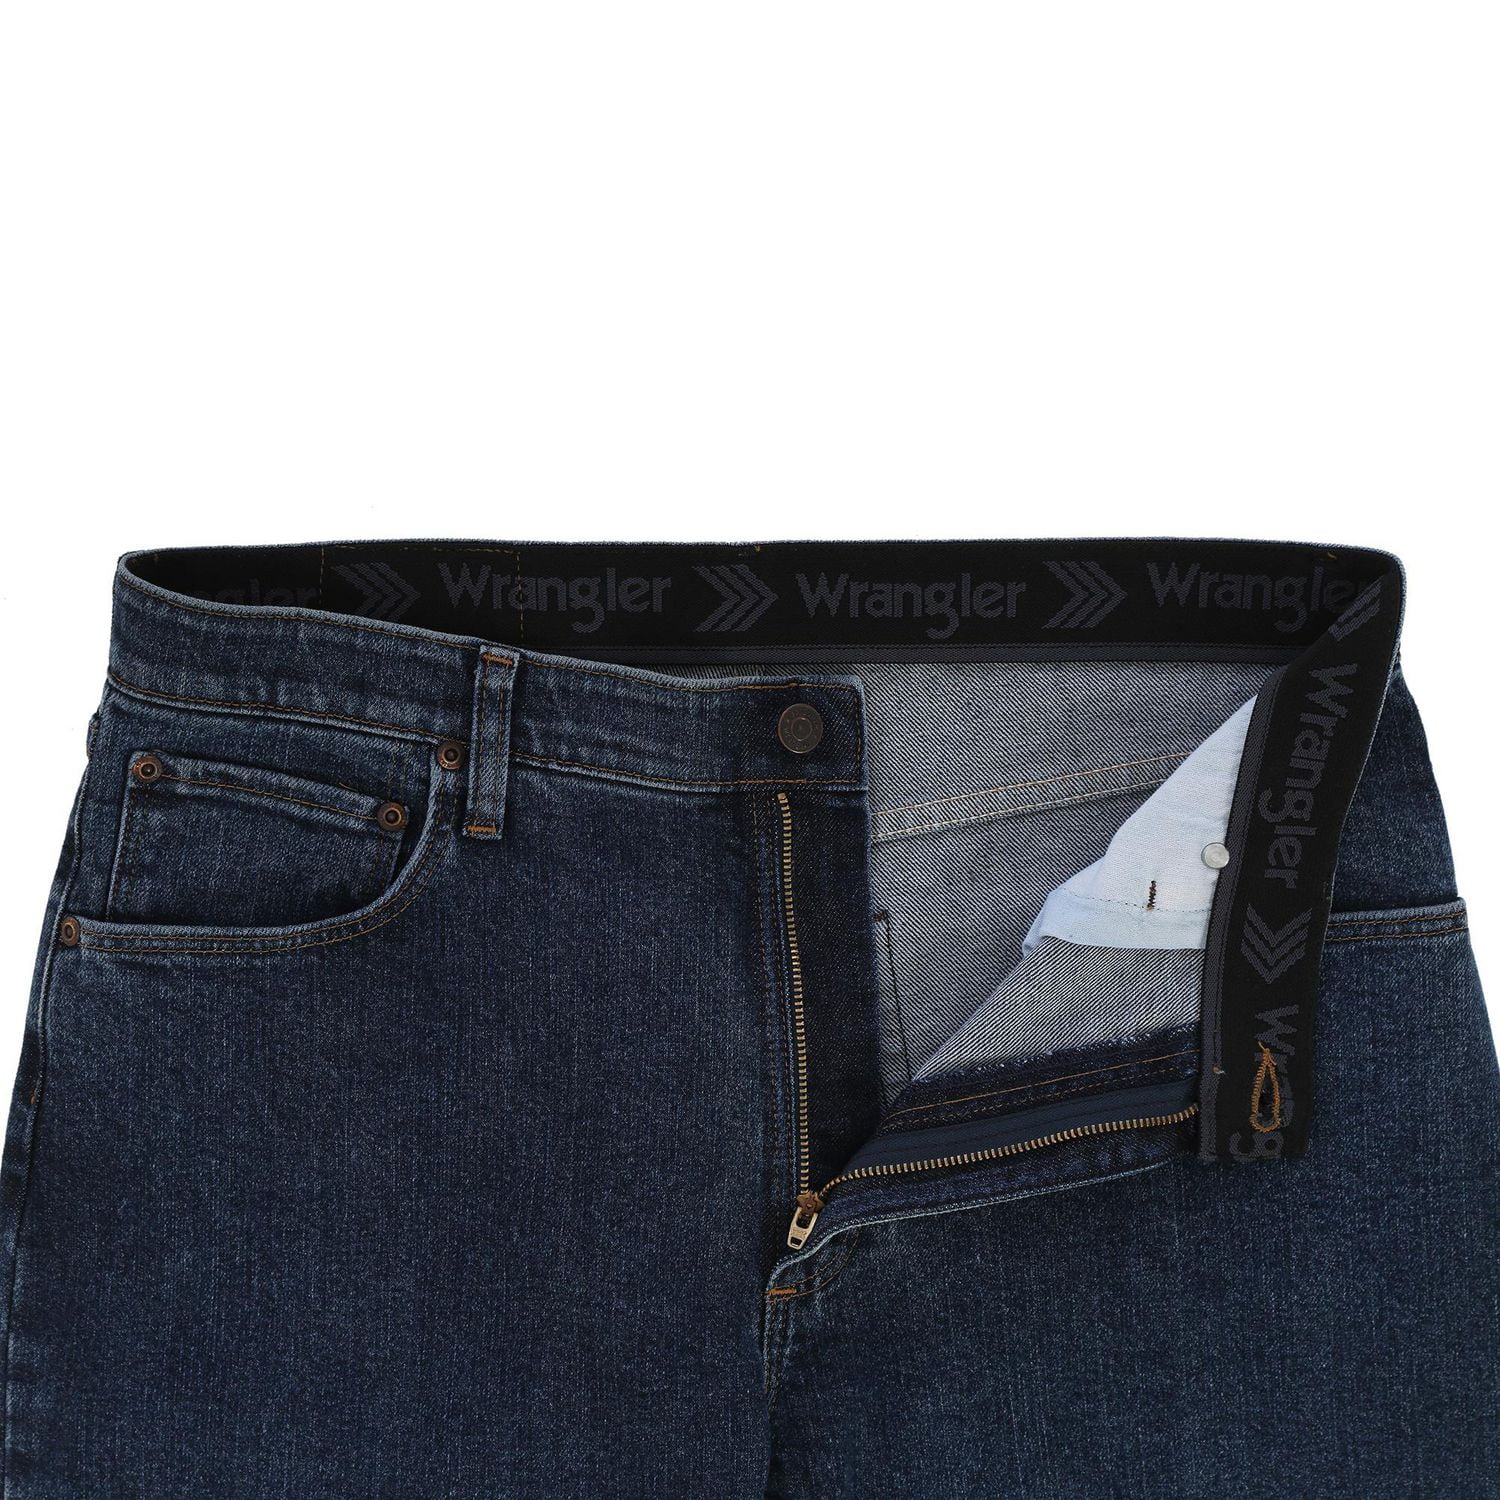 Wrangler Men's Performance Regular Fit Jean, Regular fit, 5 pocket styling  